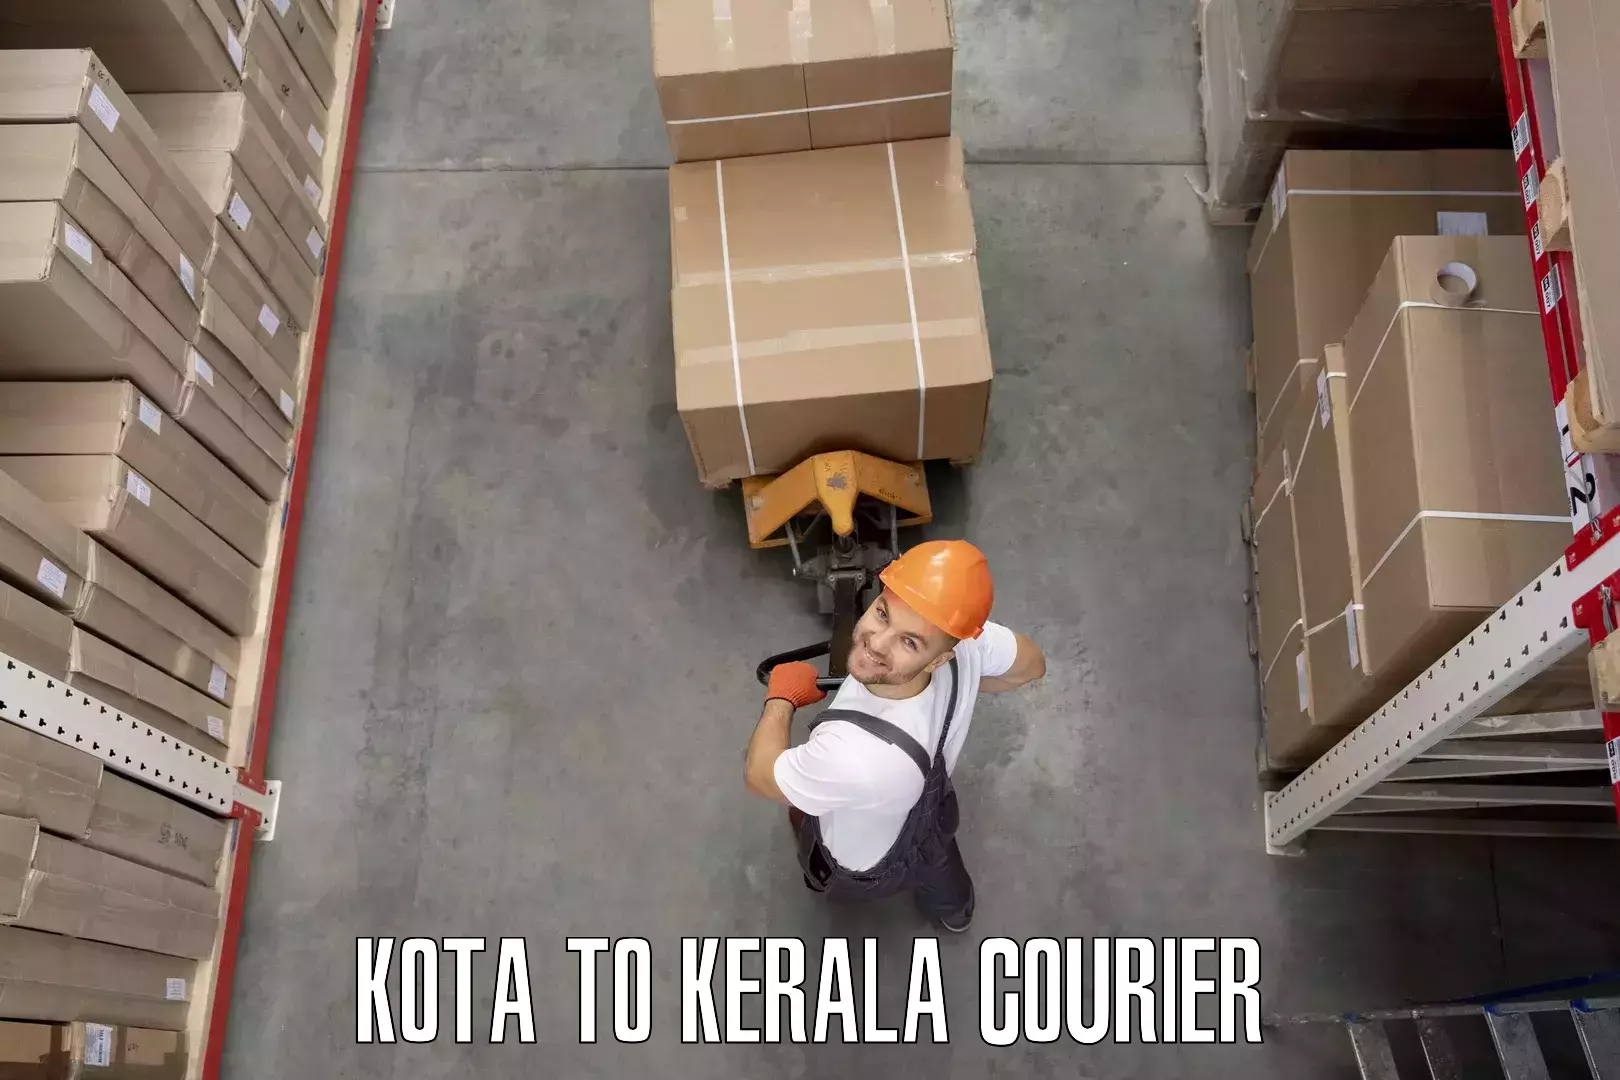 Furniture delivery service Kota to Kerala